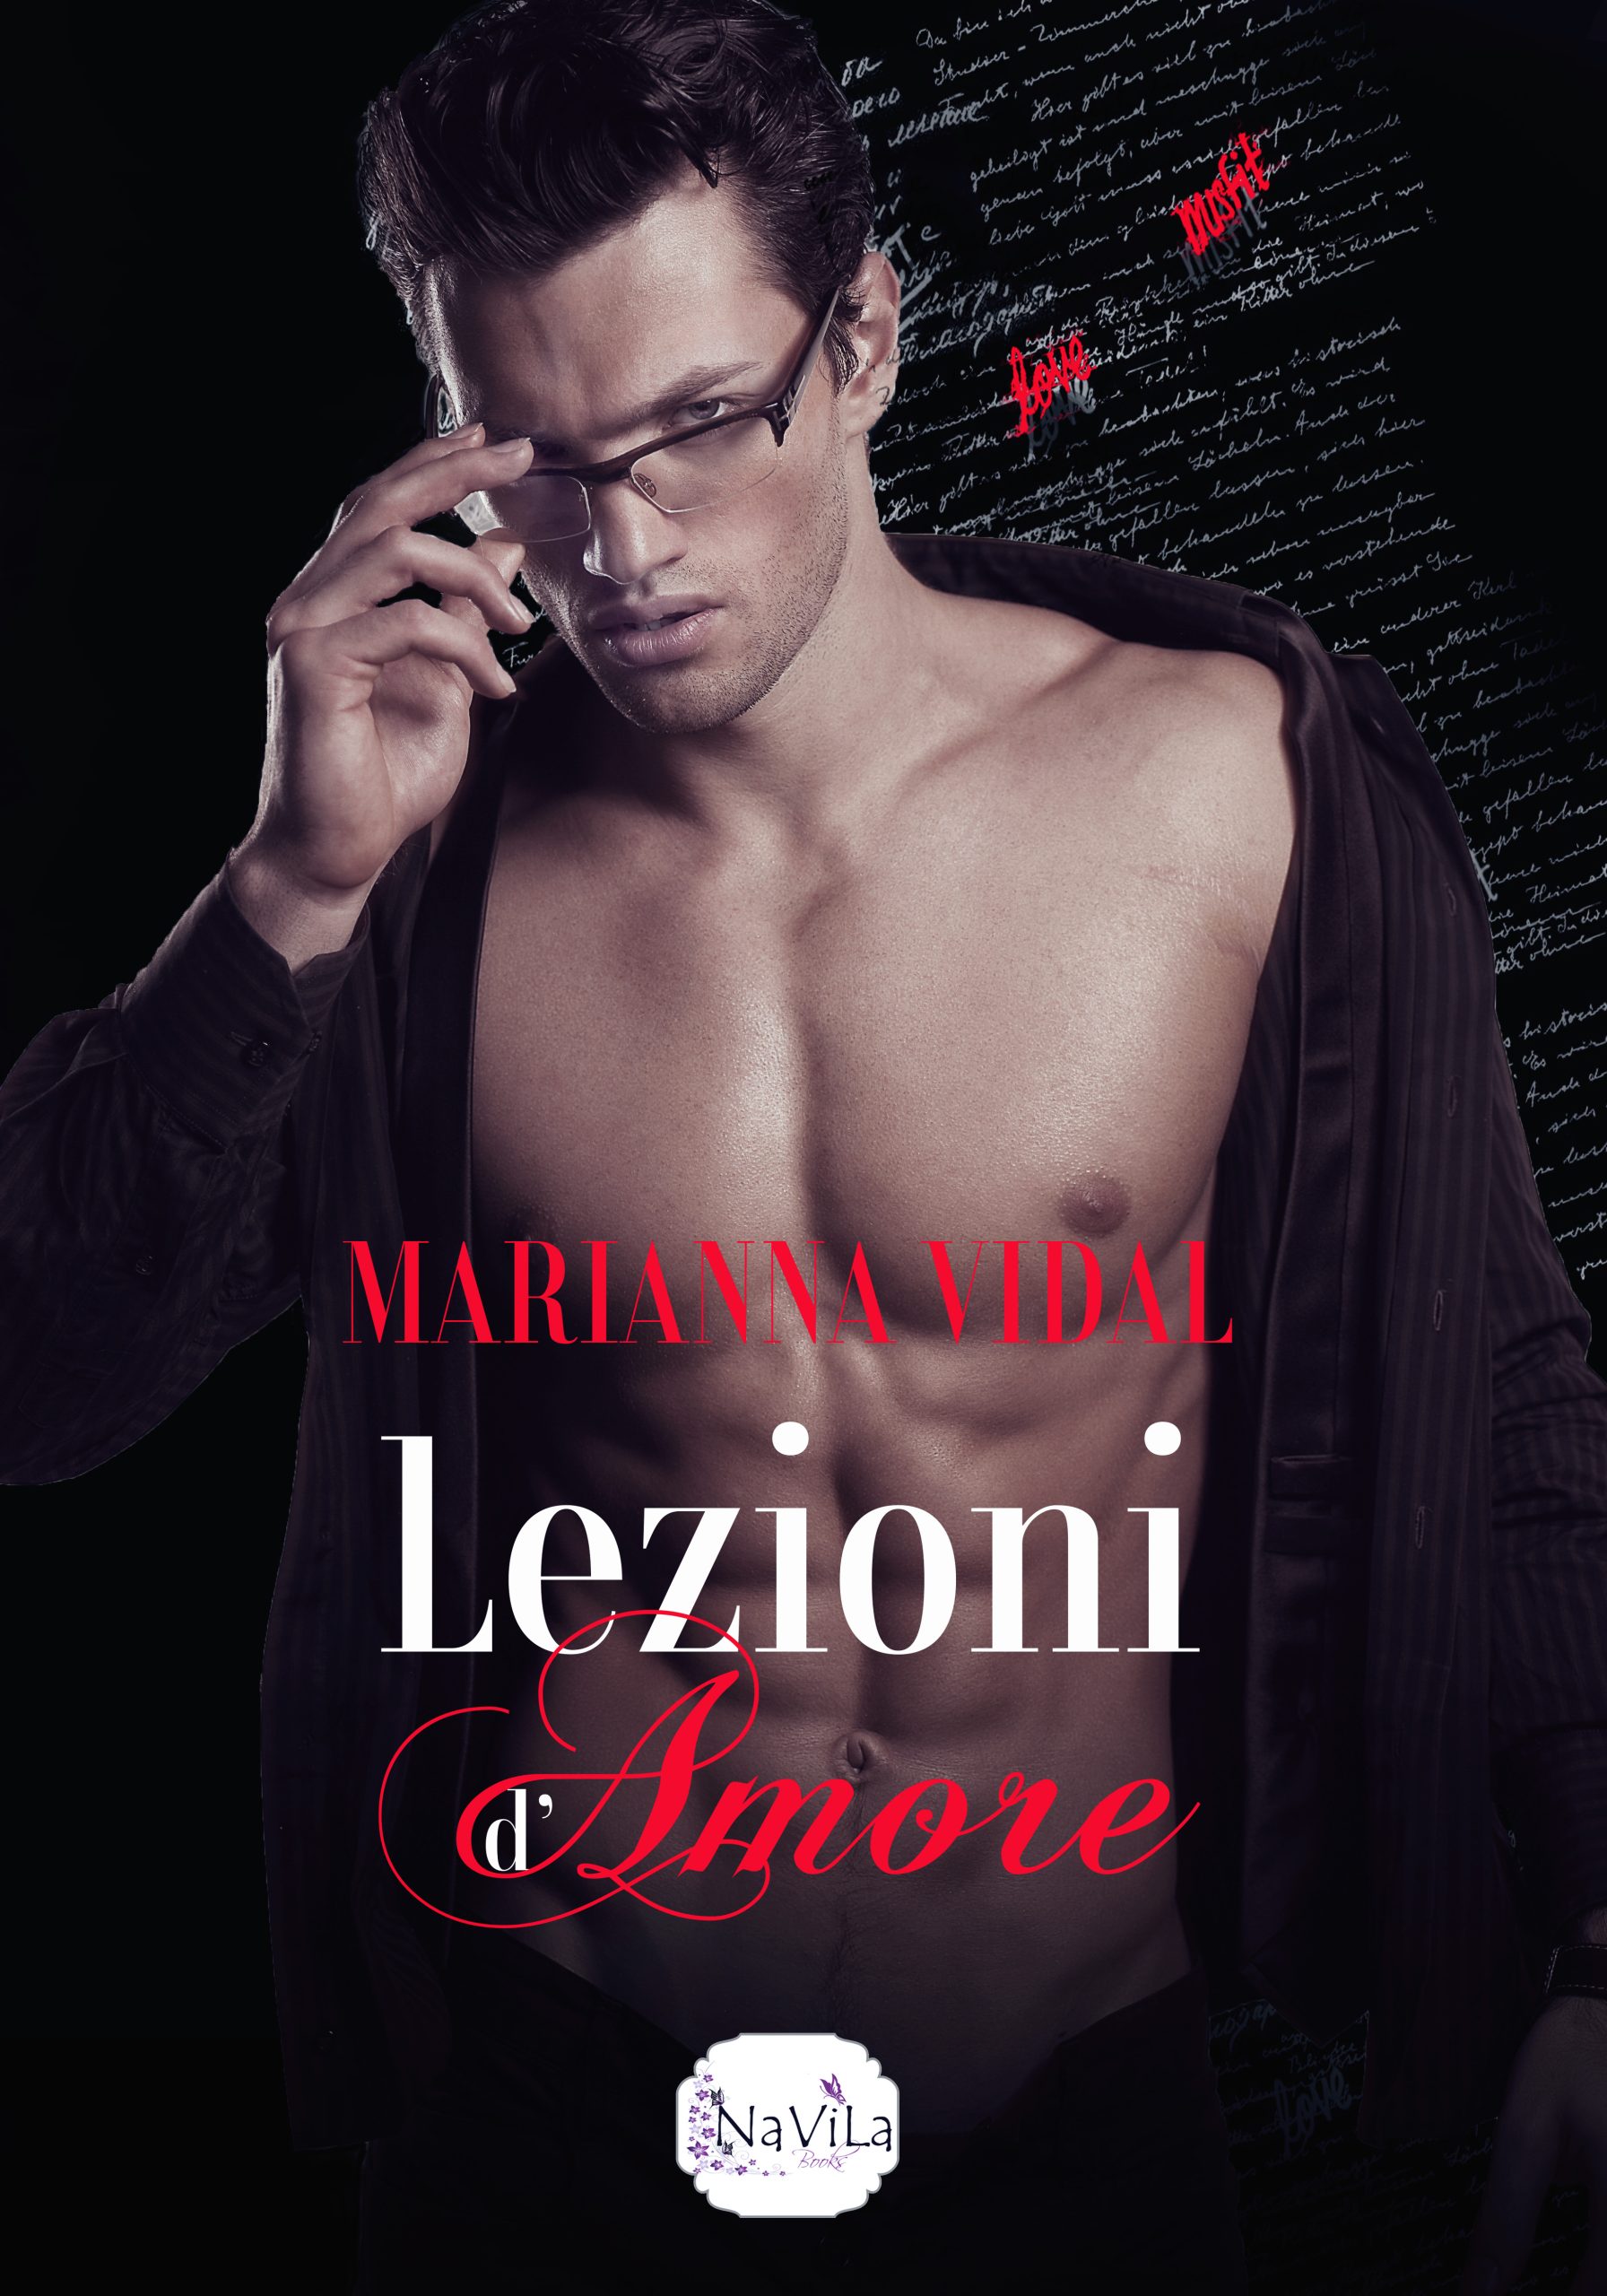 Cover reveal: “Lezioni d’amore” di MARIANNA VIDAL